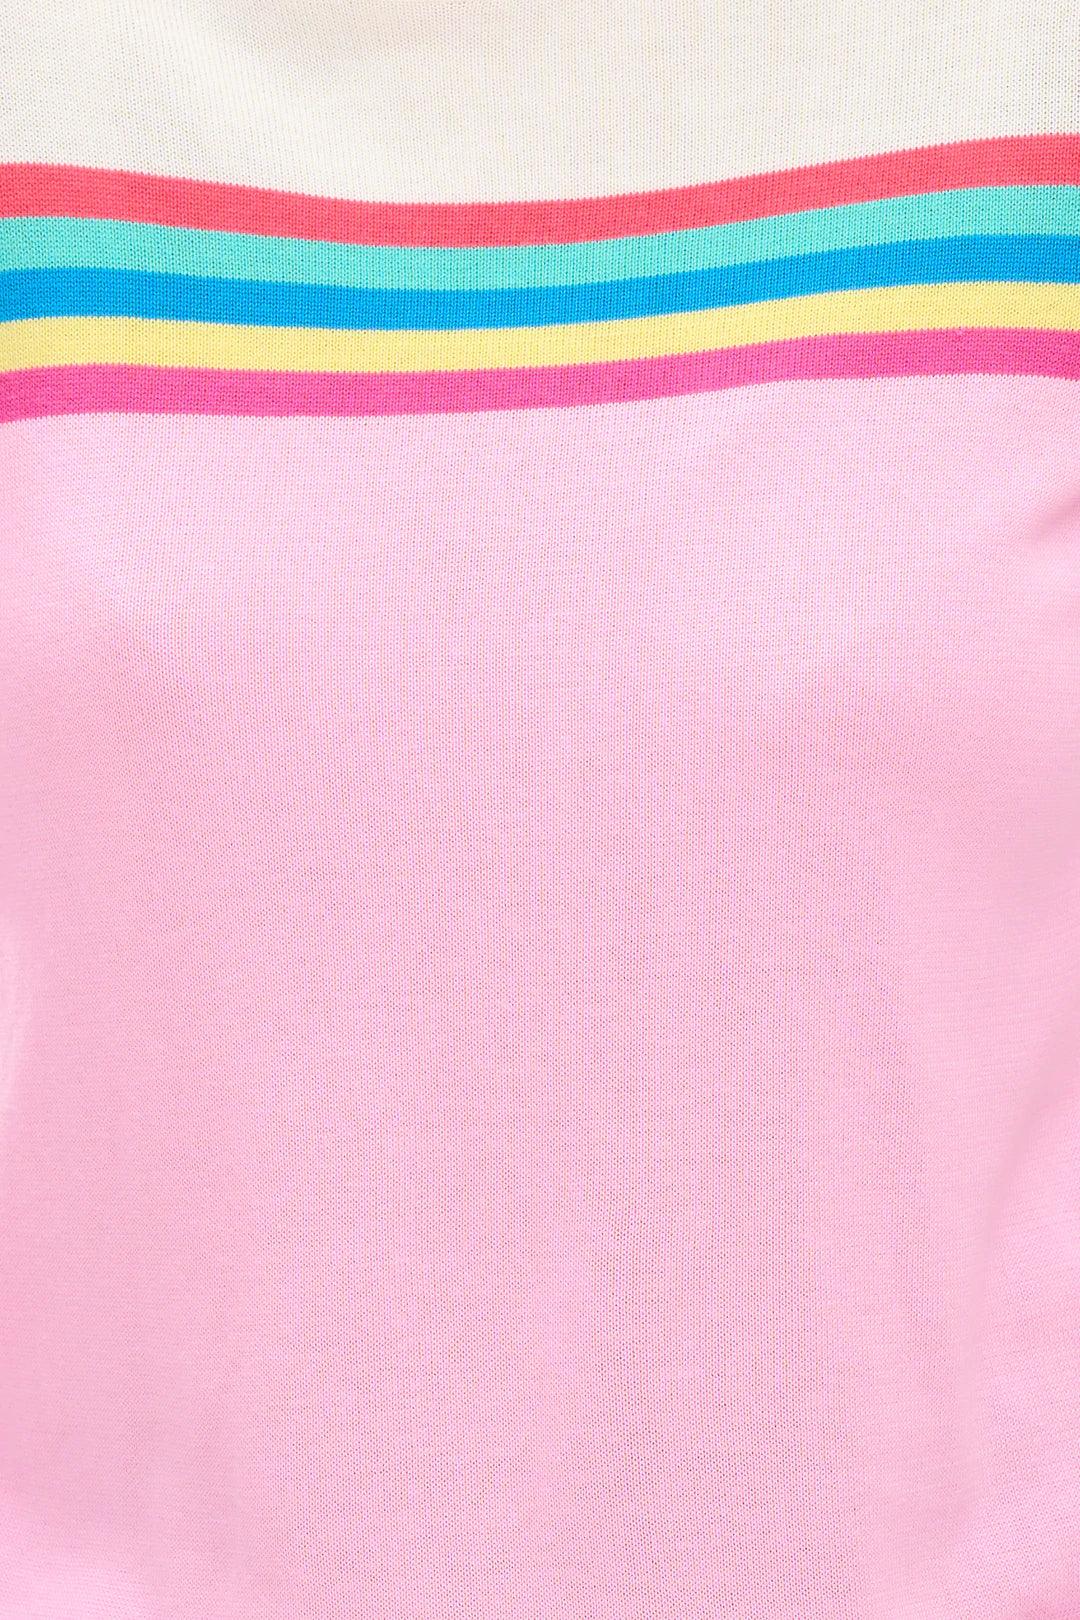 Jersey Rita Pink Rainbow Split - ECRU